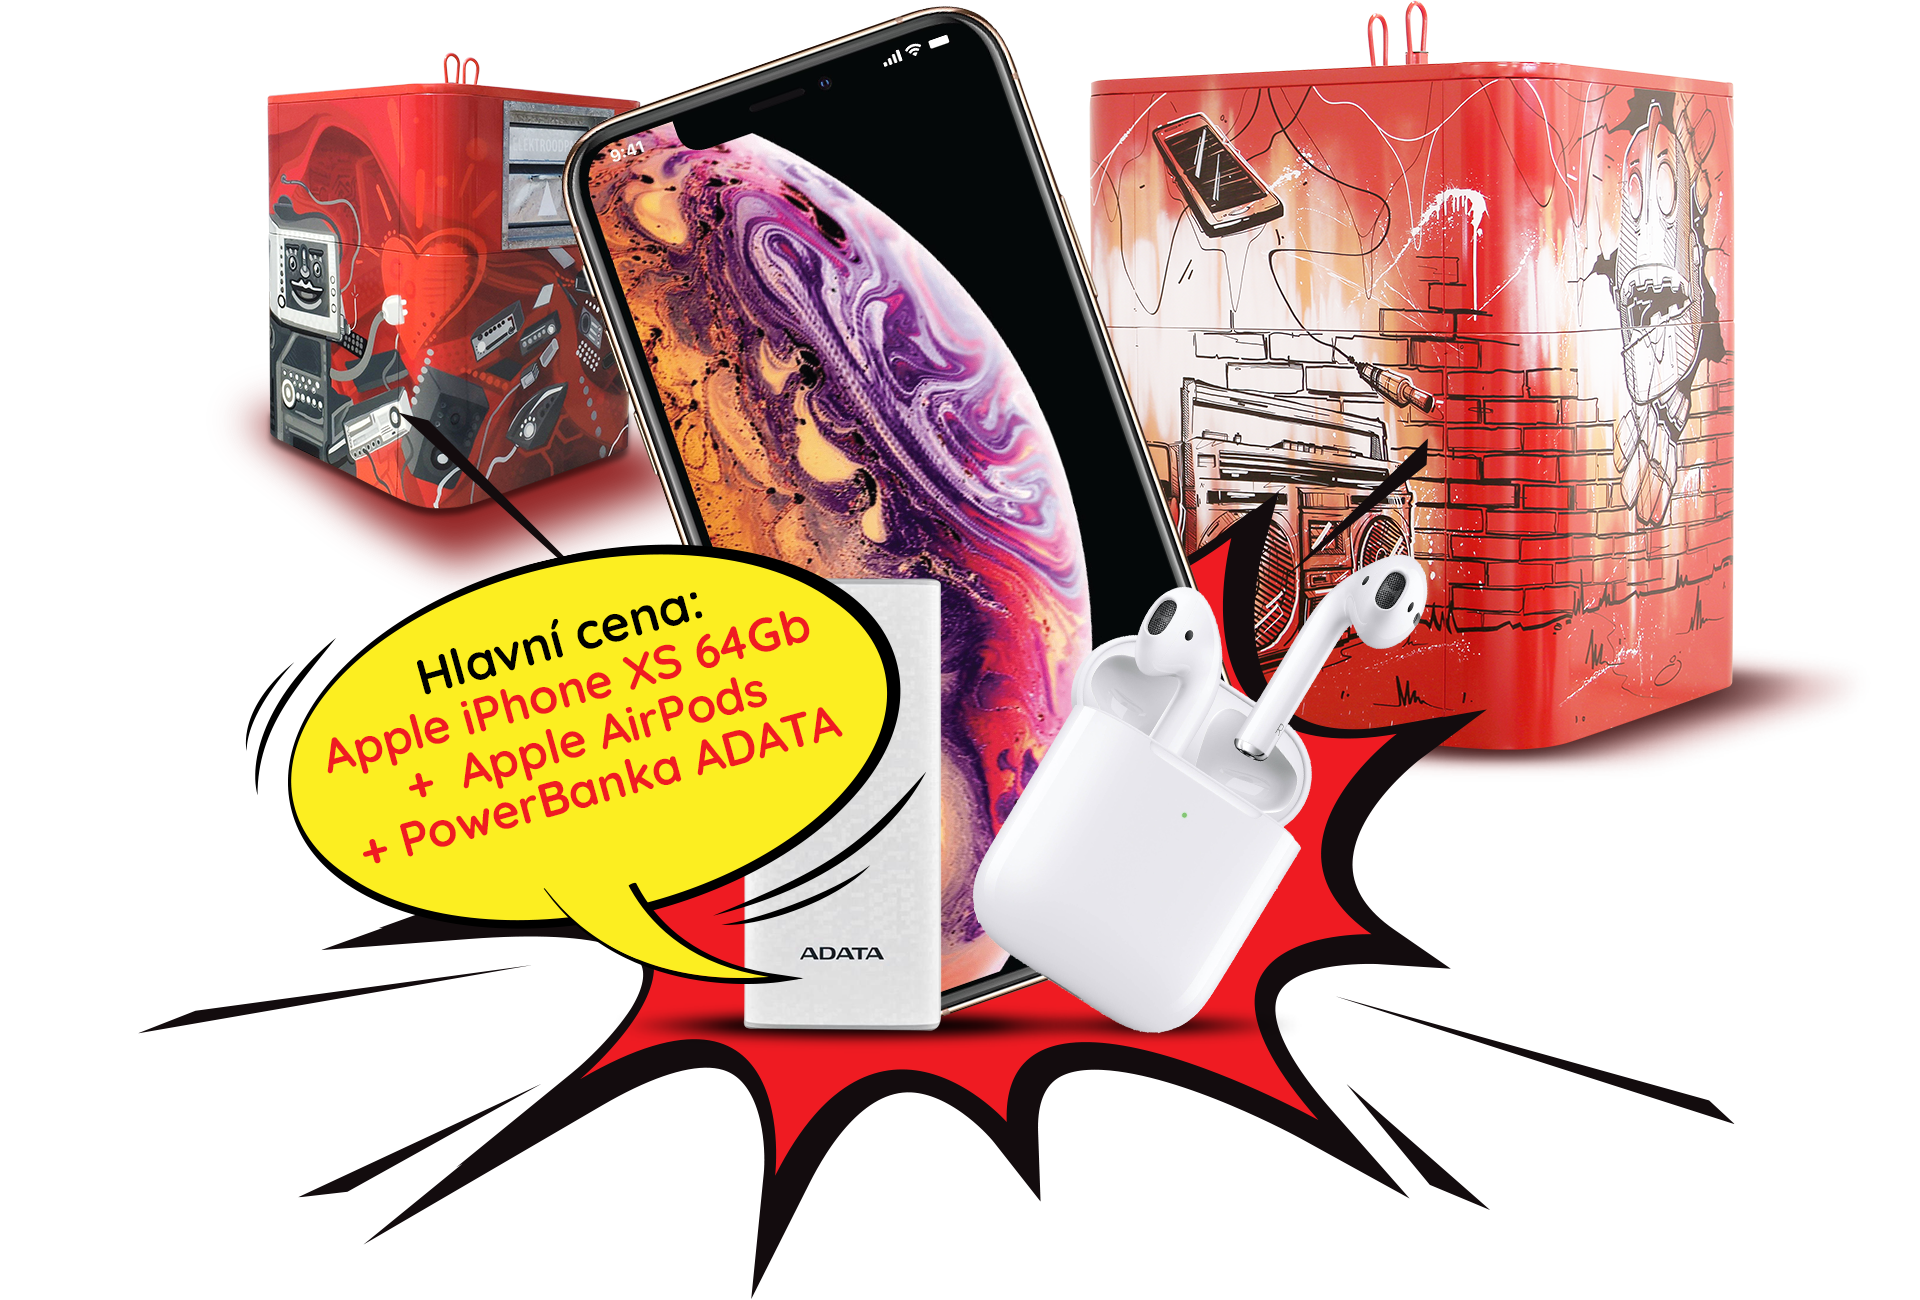 Vyhraj Apple iPhone XS + Apple Air Pods + powerbanku ADATA